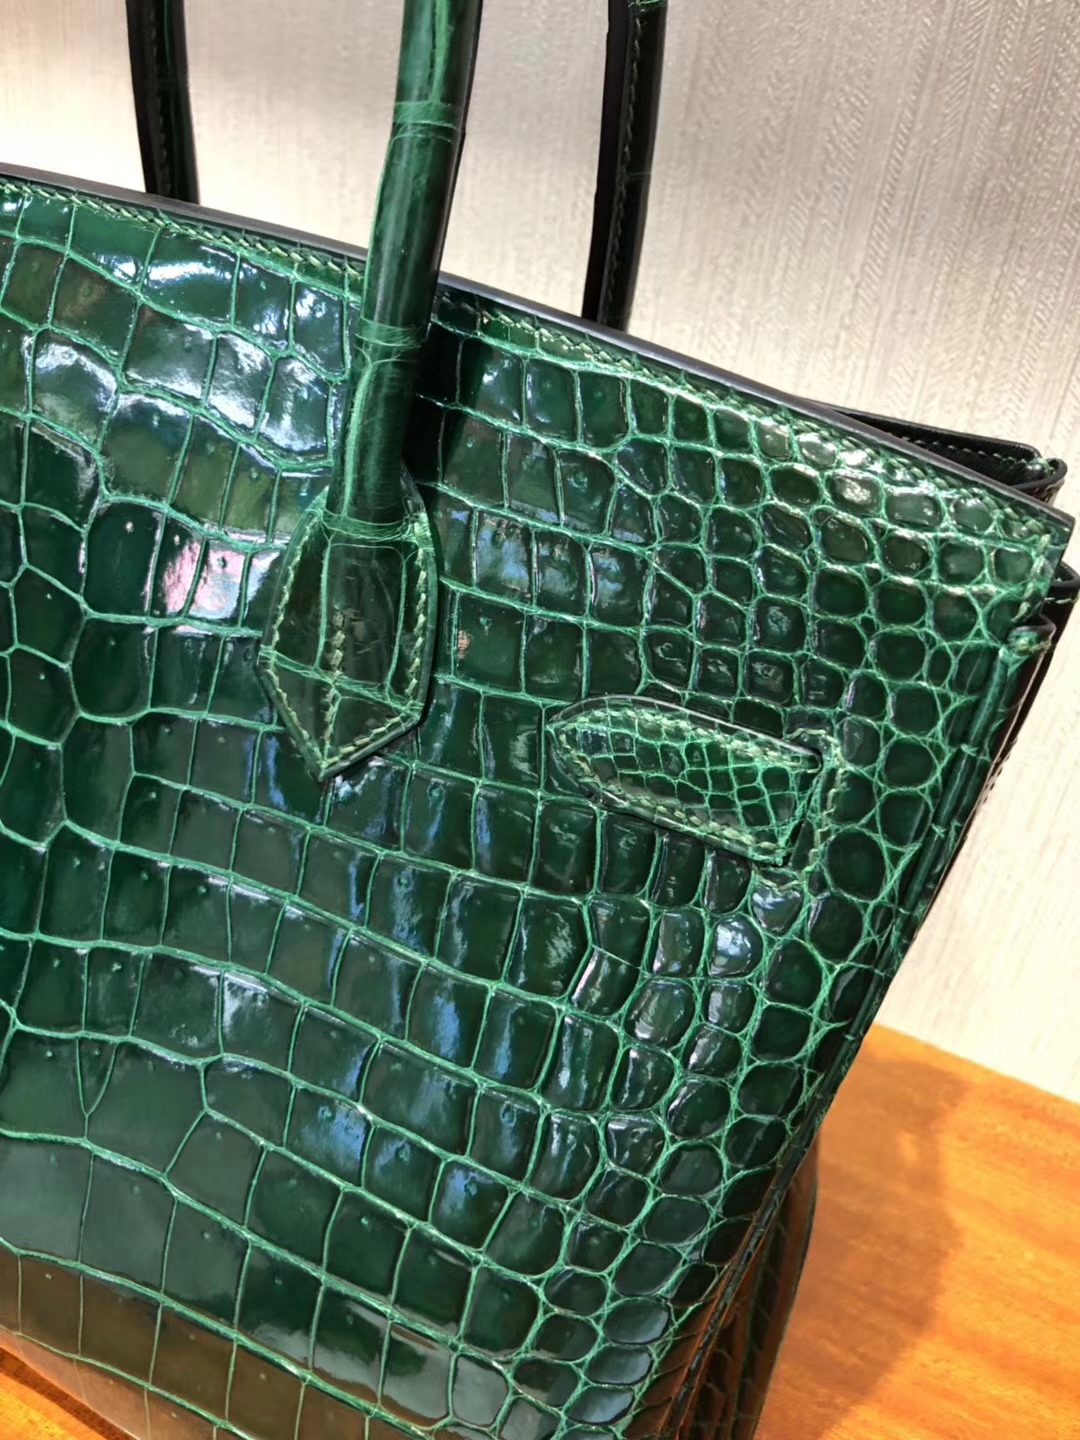 High Quality Hermes Shiny Crocodile Leather Birkin30CM Bag in CK67 Vert Fonce